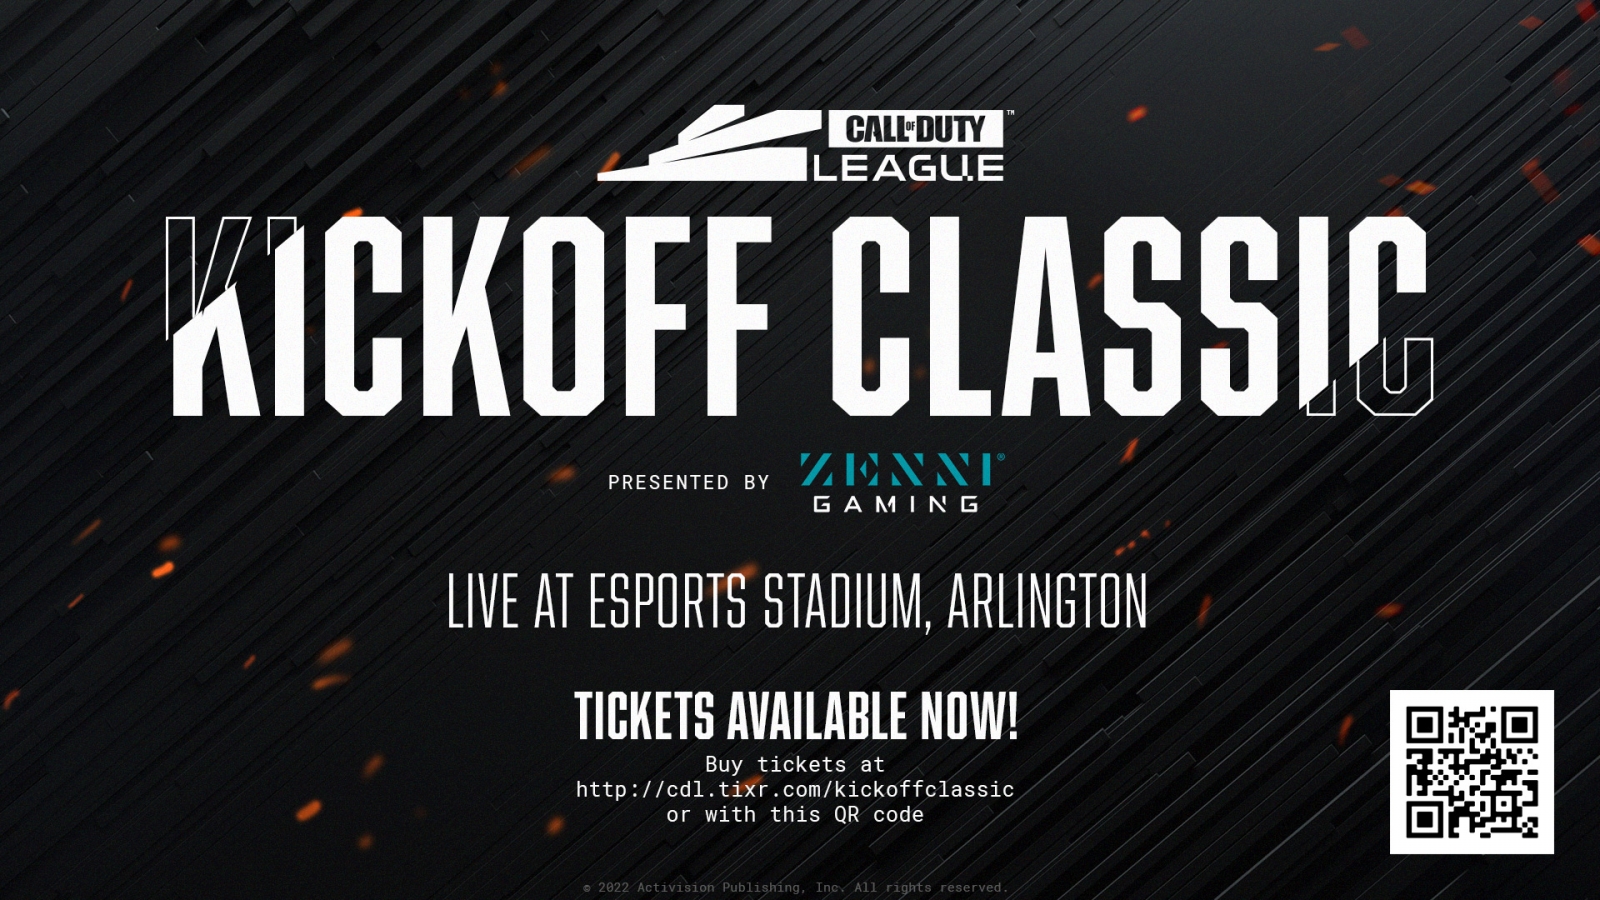 Professional Fighters League - Regular Season 2 Tickets at Esports Stadium  Arlington in Arlington by Esports Stadium Arlington